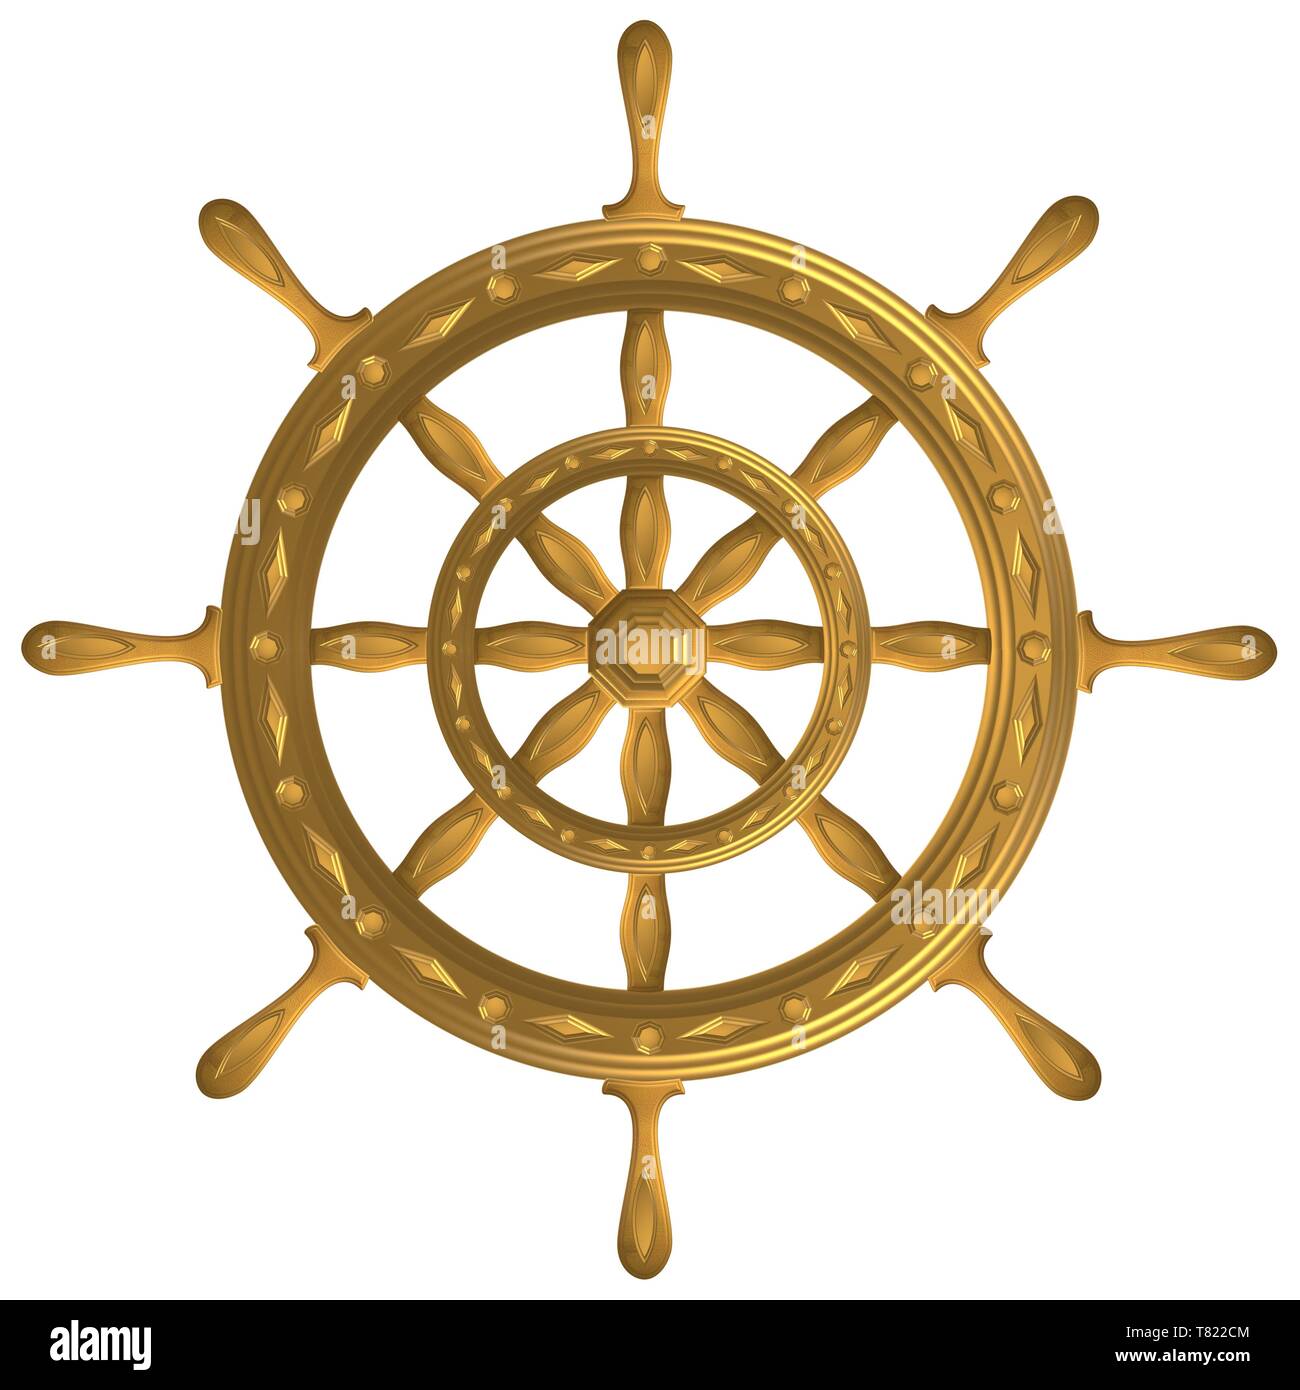 Goldener Globus Kompass Steuerrad Anker Windrose Stockfoto